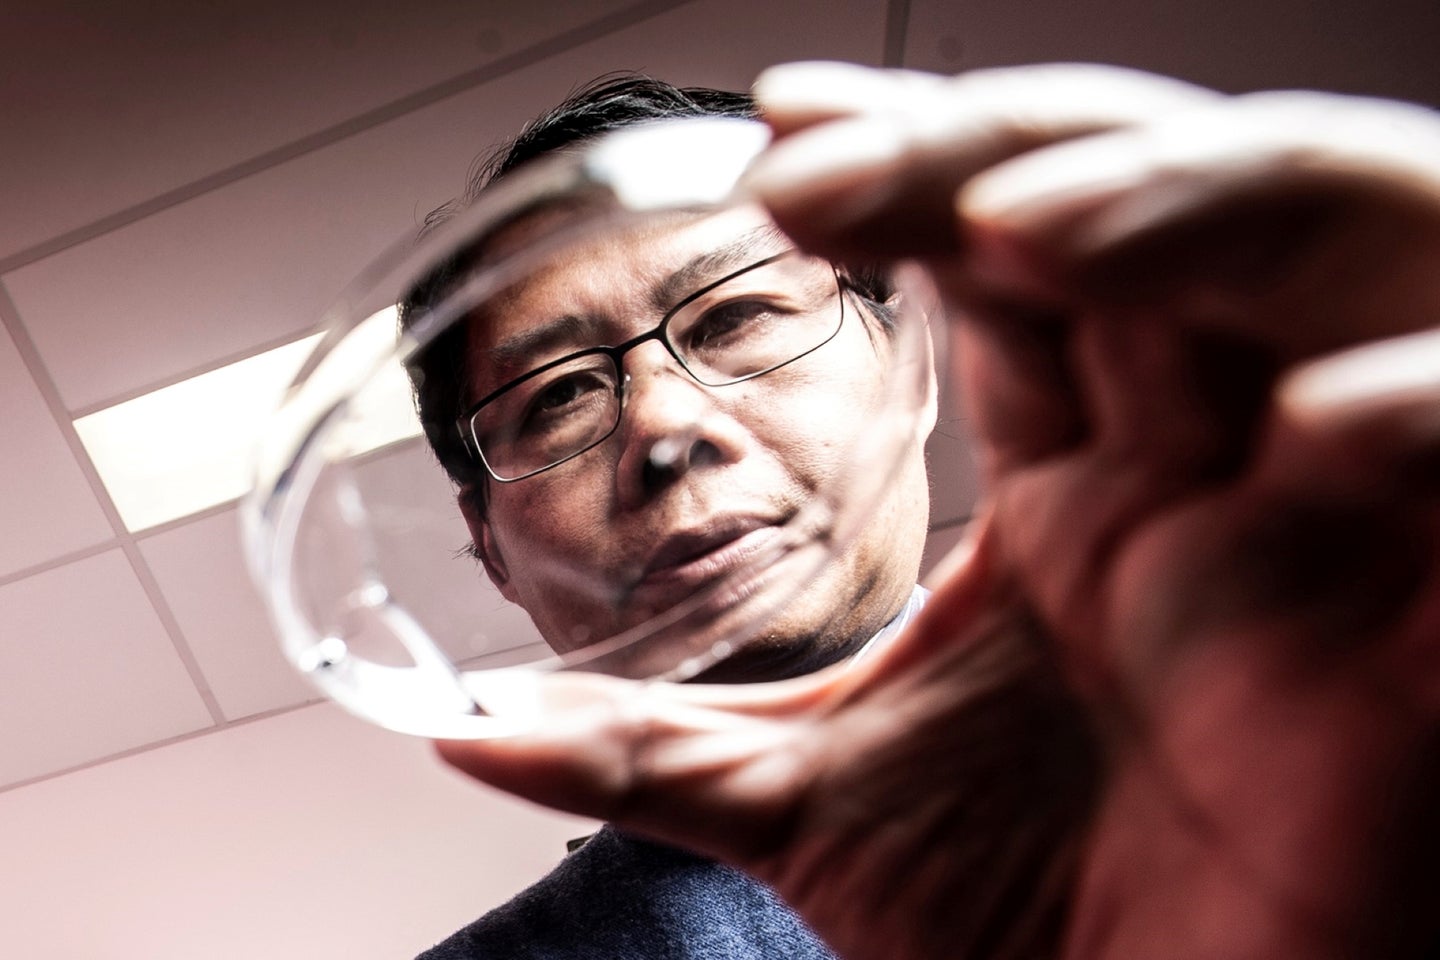 University of Wollongong physicist Xiaolin Wang looks over liquid metal in petri dish